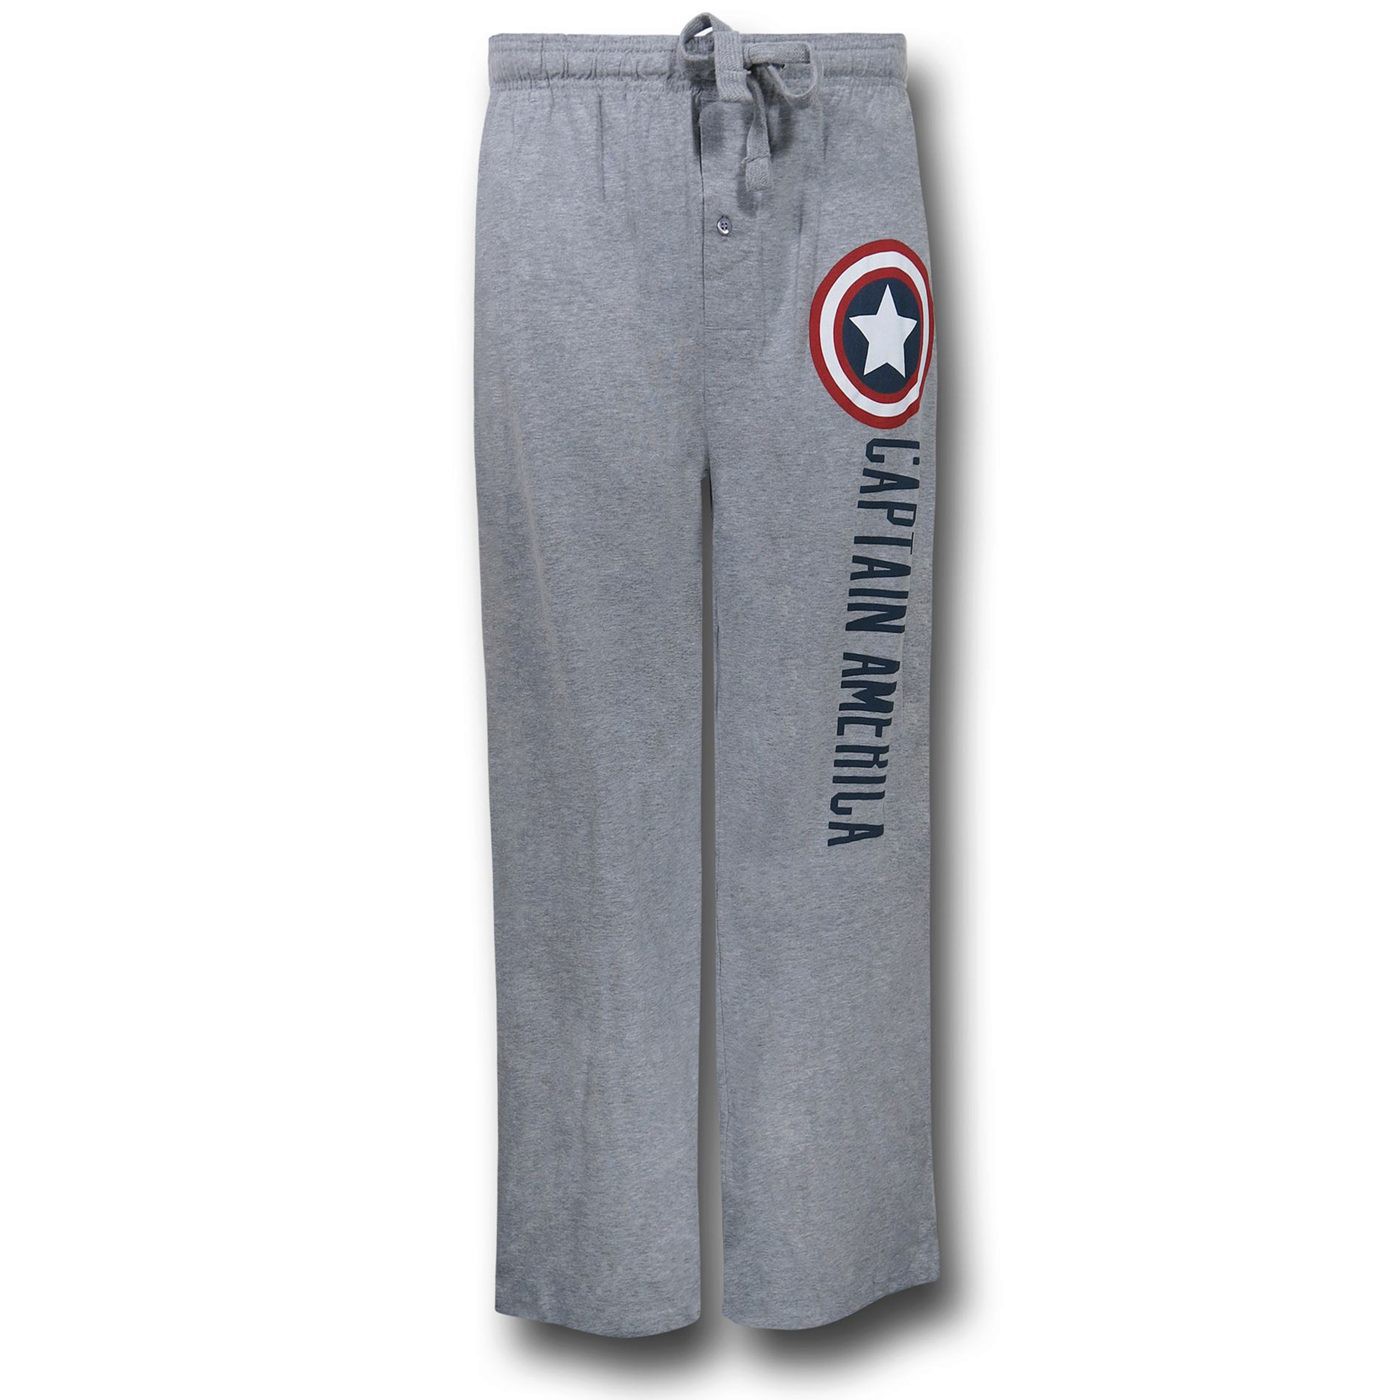 Captain America Heather Grey Sleep Pants